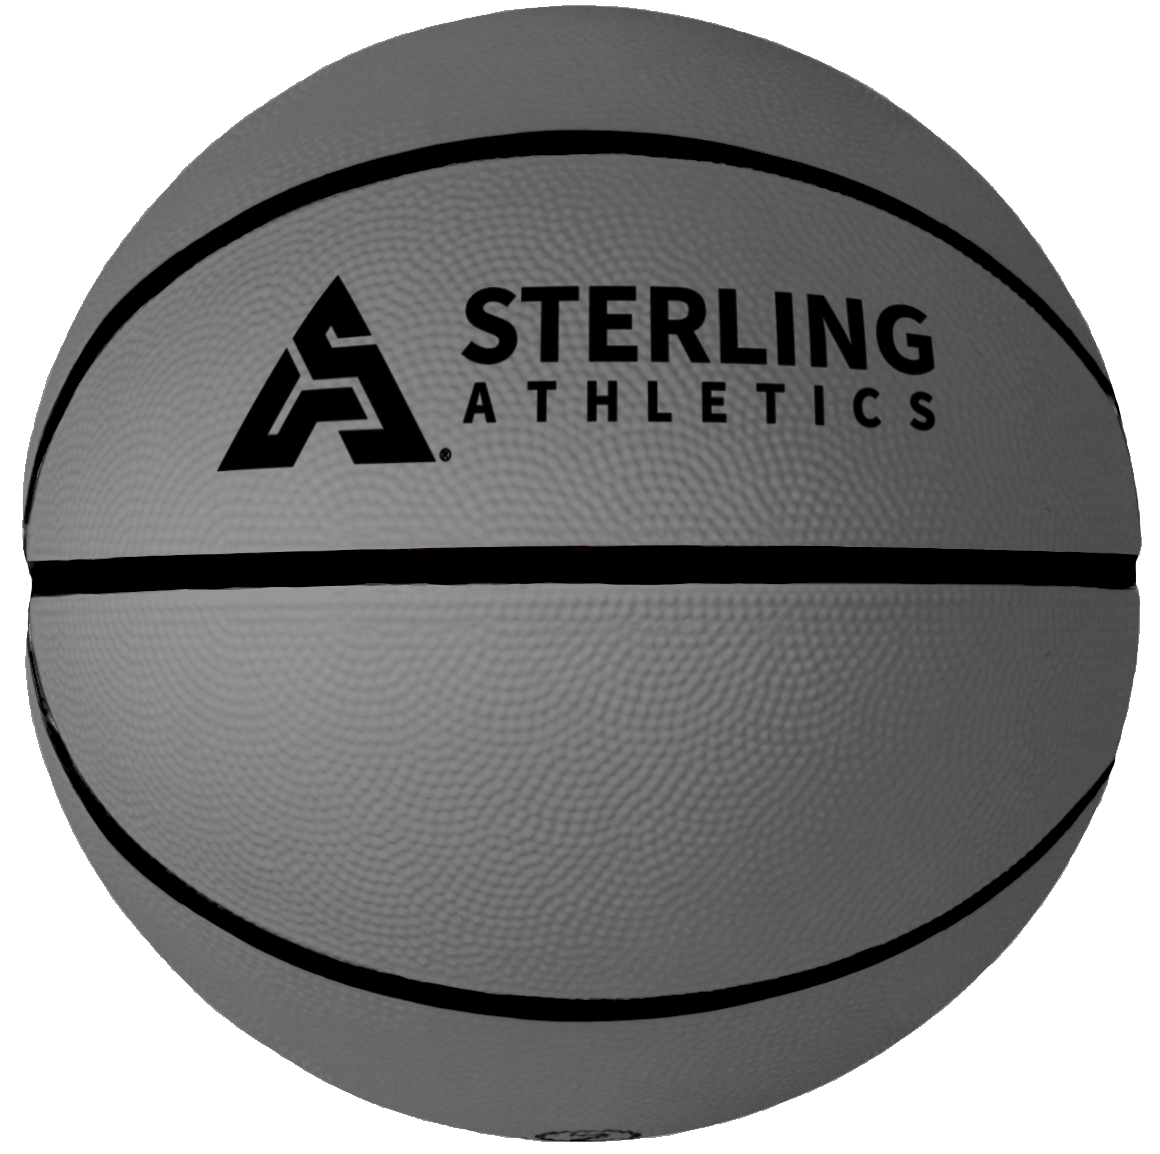 Sterling Athletics Orange/Black/White Indoor/Outdoor Rubber Basketball Intermediate Size 6 (28.5)